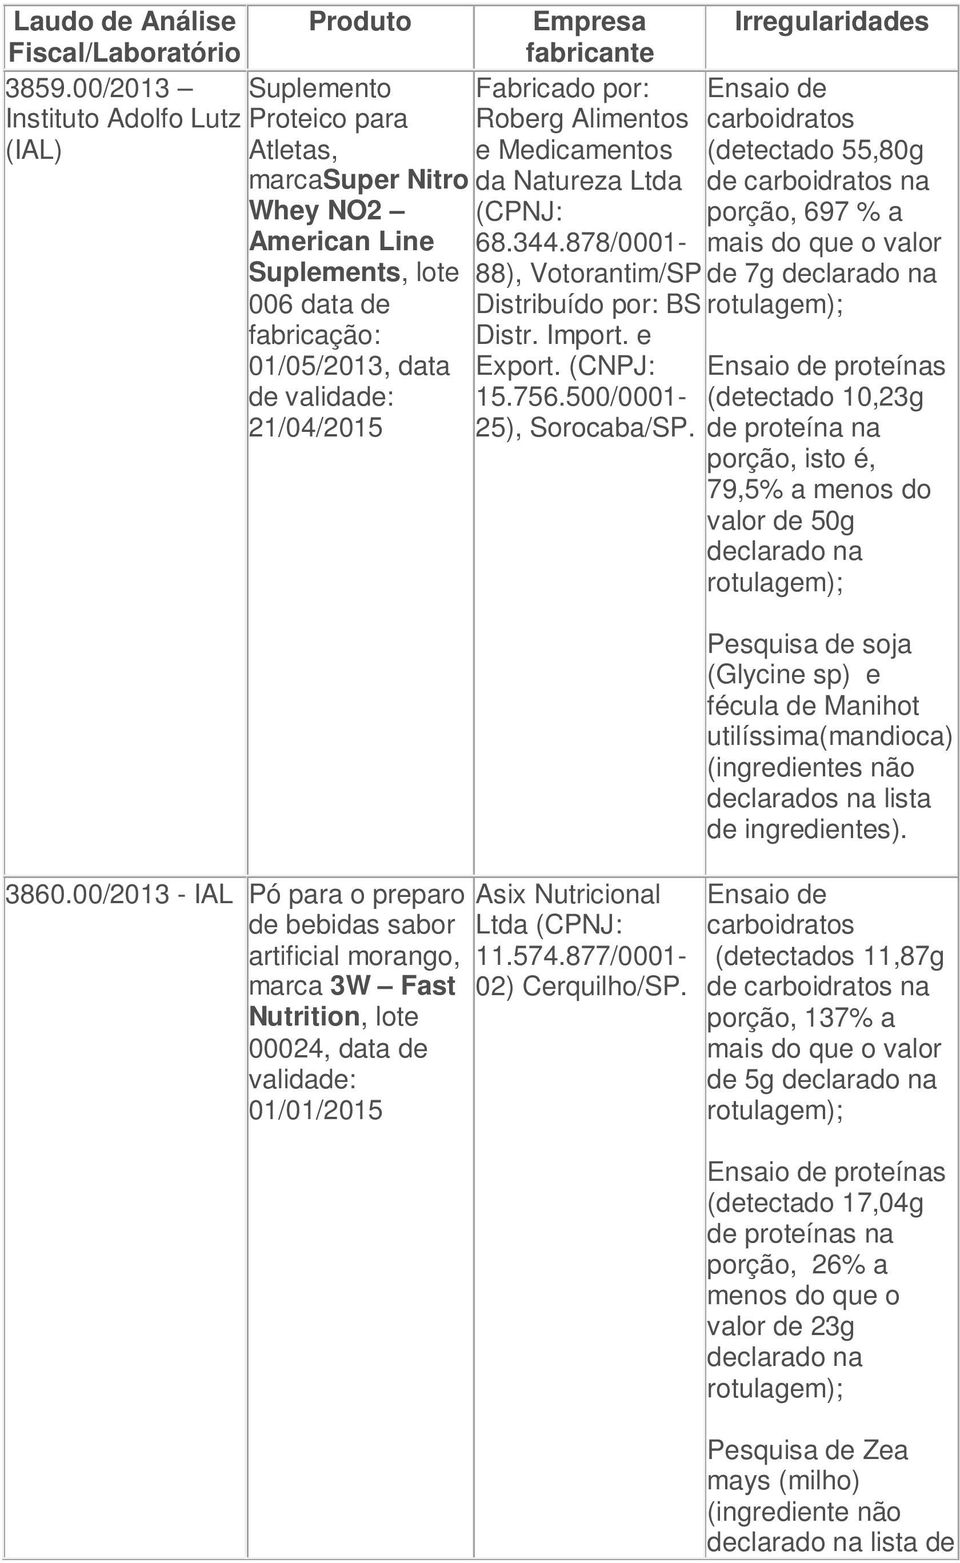 Medicamentos da Natureza Ltda 68.344.878/0001-88), Votorantim/SP Distribuído por: BS Distr. Import. e Export. (CNPJ: 15.756.500/0001-25), Sorocaba/SP.